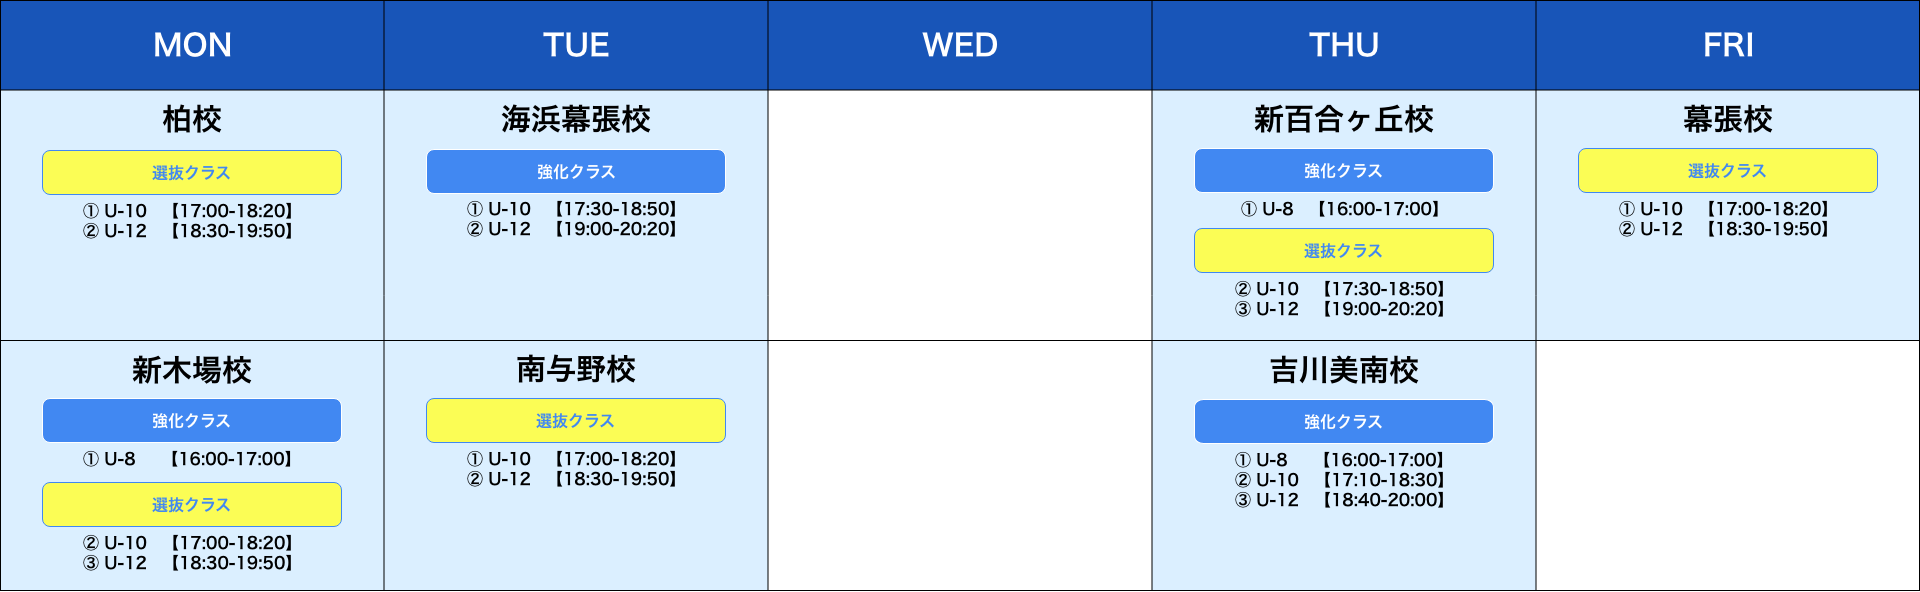 weekly_schedule